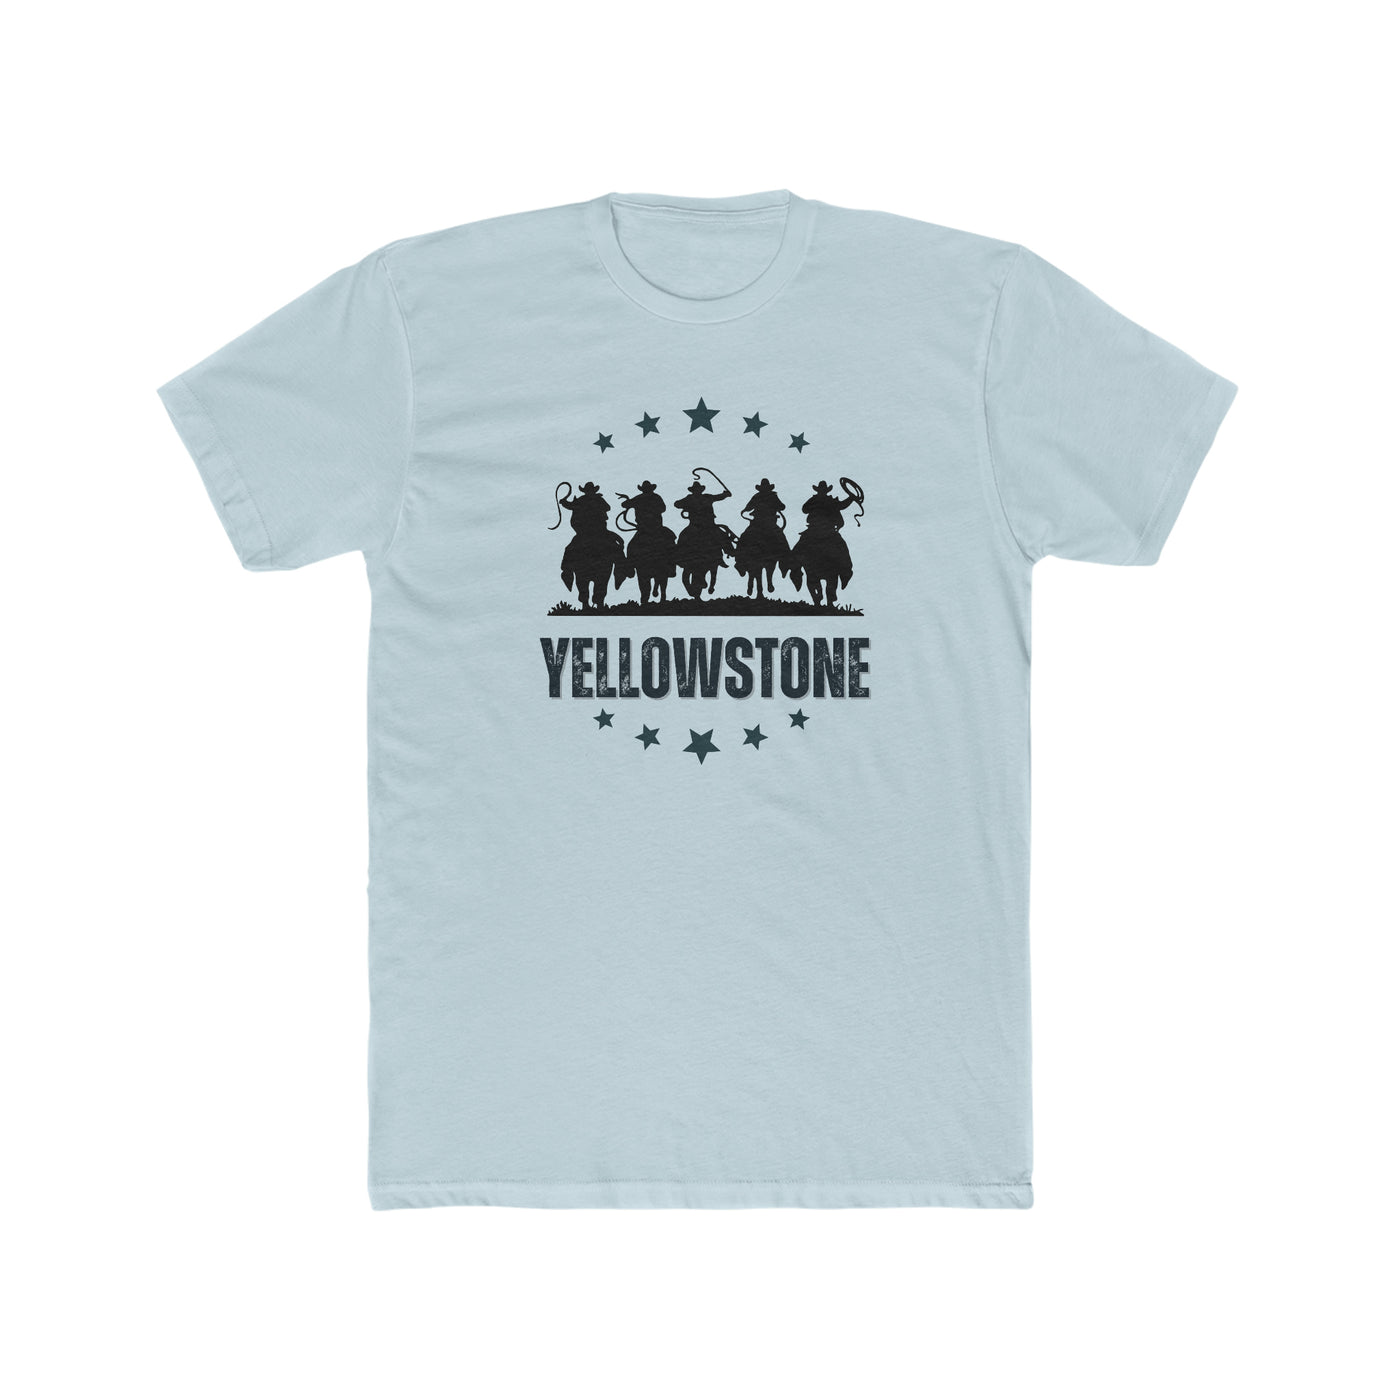 Yellowstone Tee